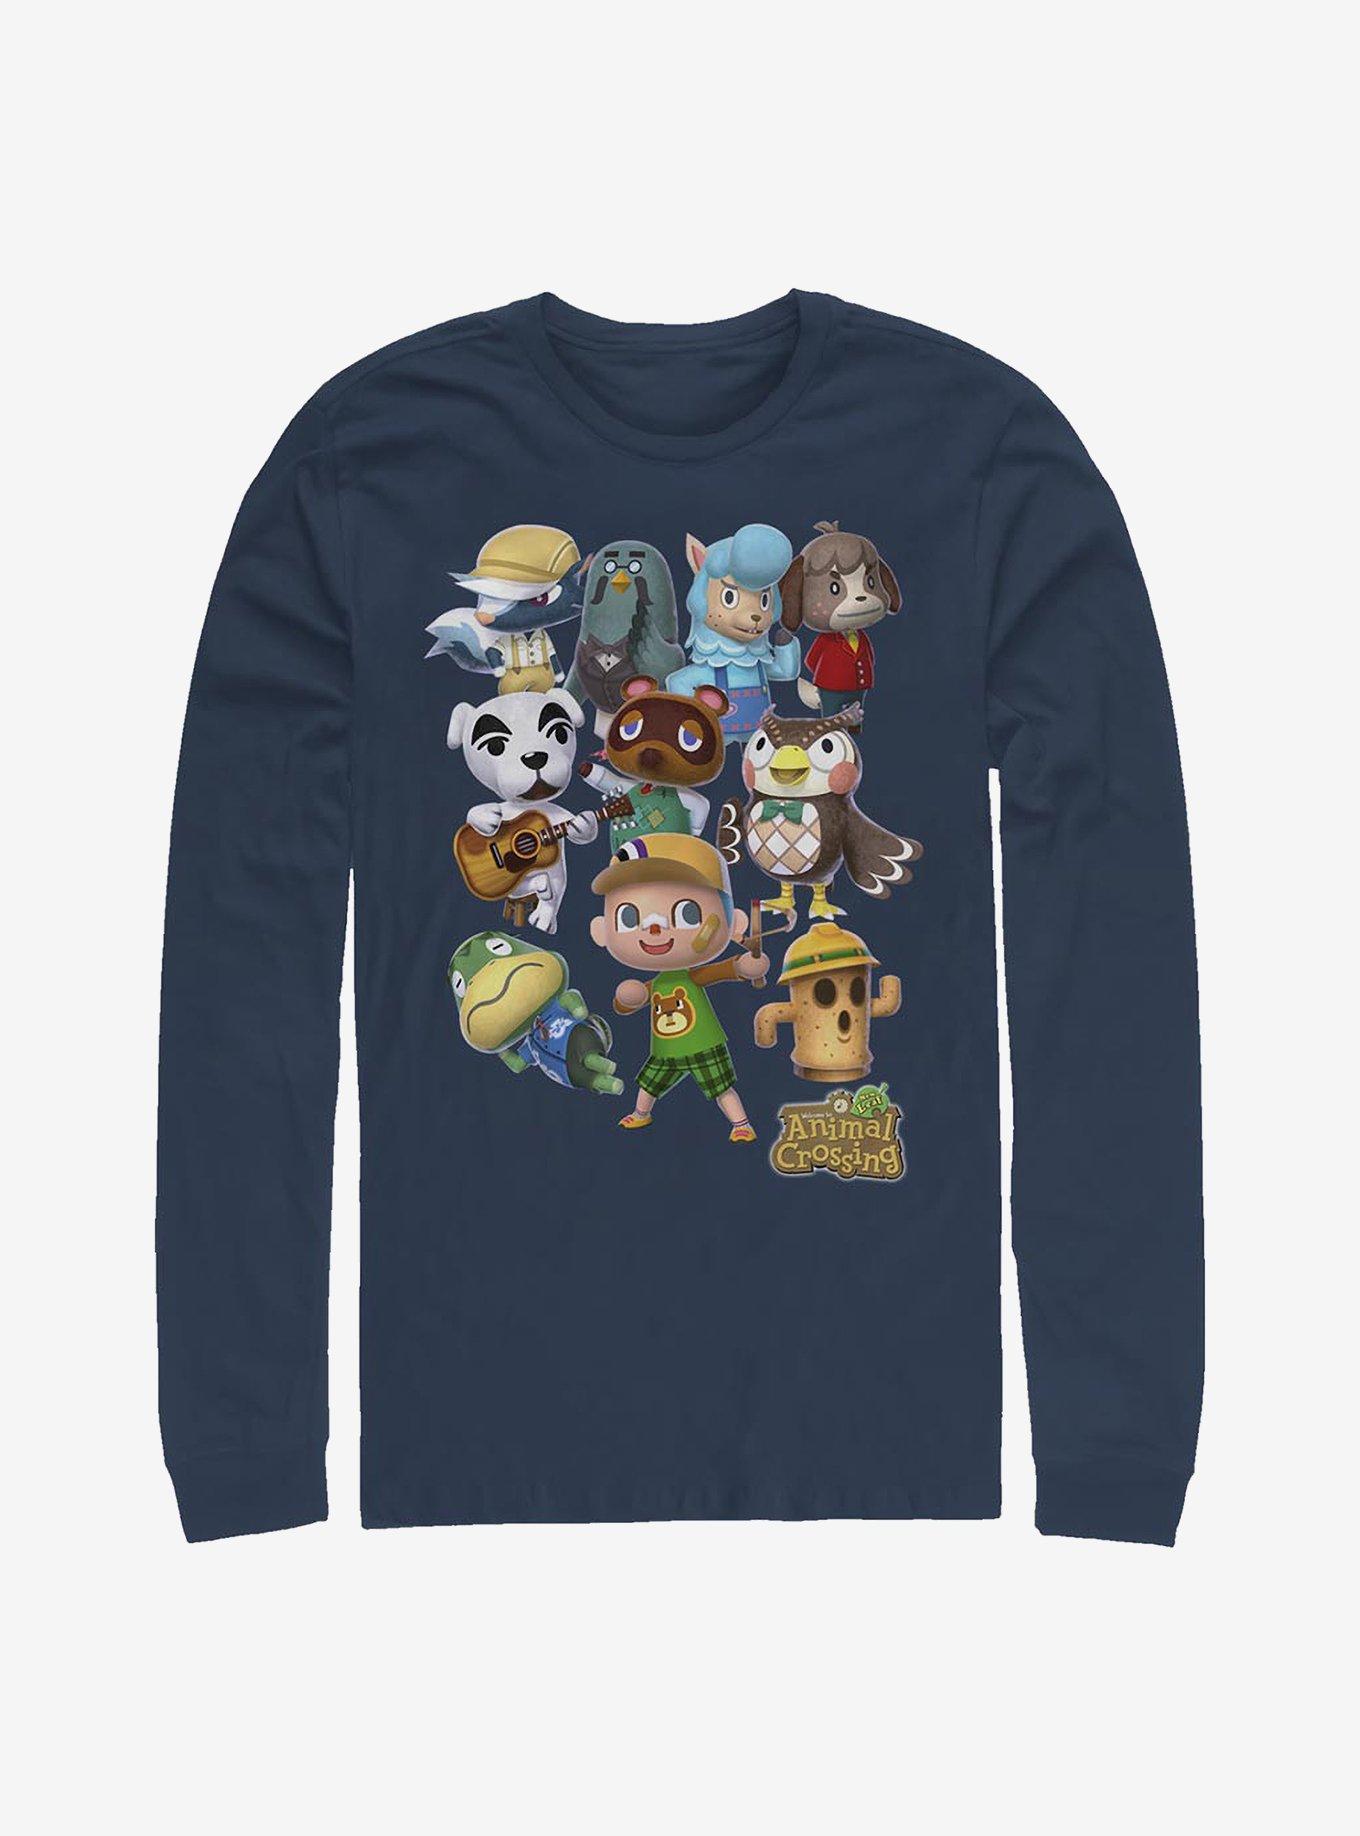 Nintendo Animal Crossing Welcome Long-Sleeve T-Shirt